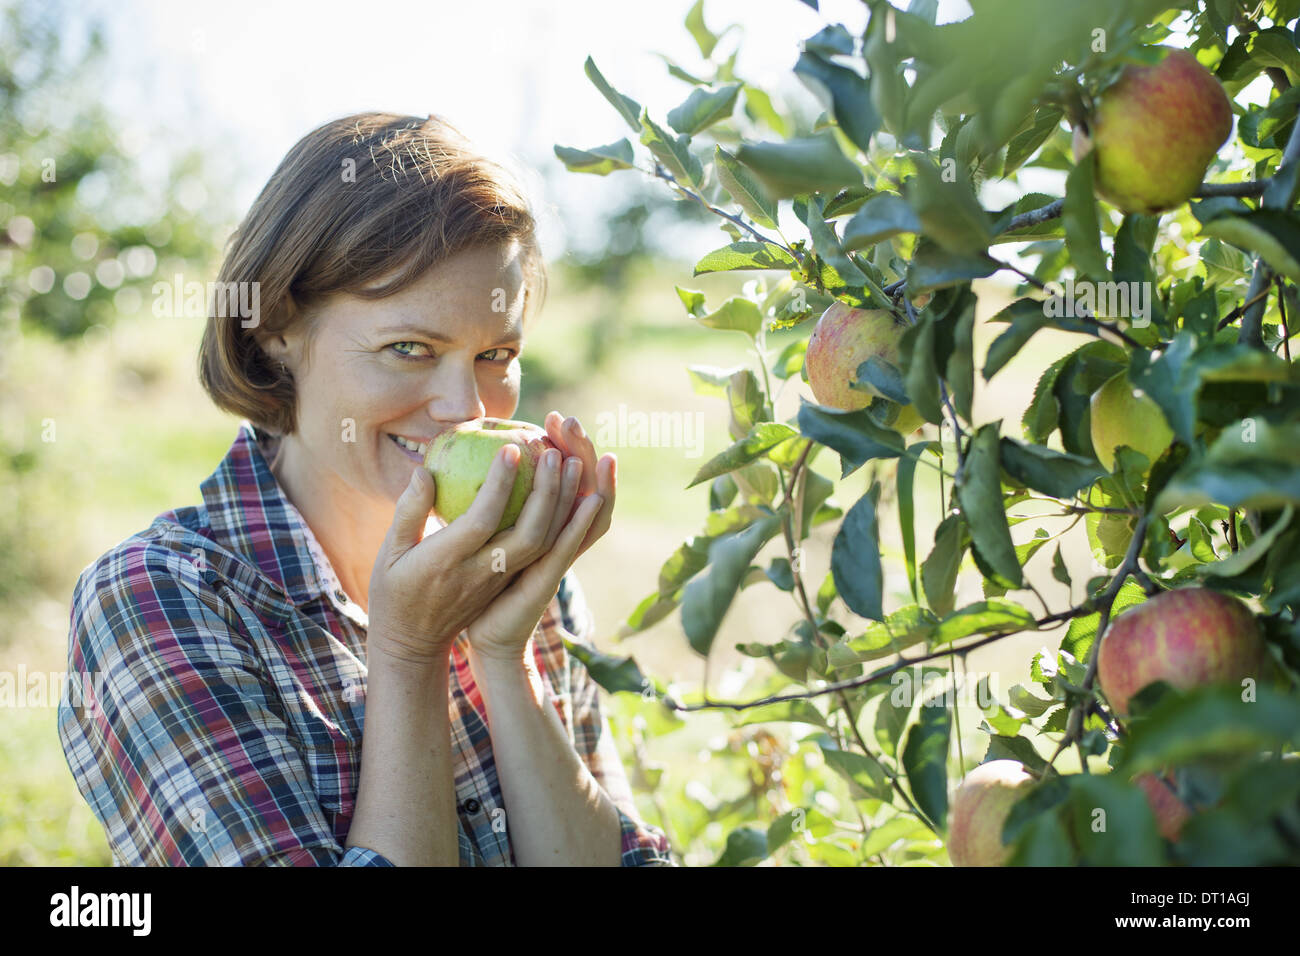 Woodstock New York USA woman holding ripe apple at an organic fruit farm Stock Photo